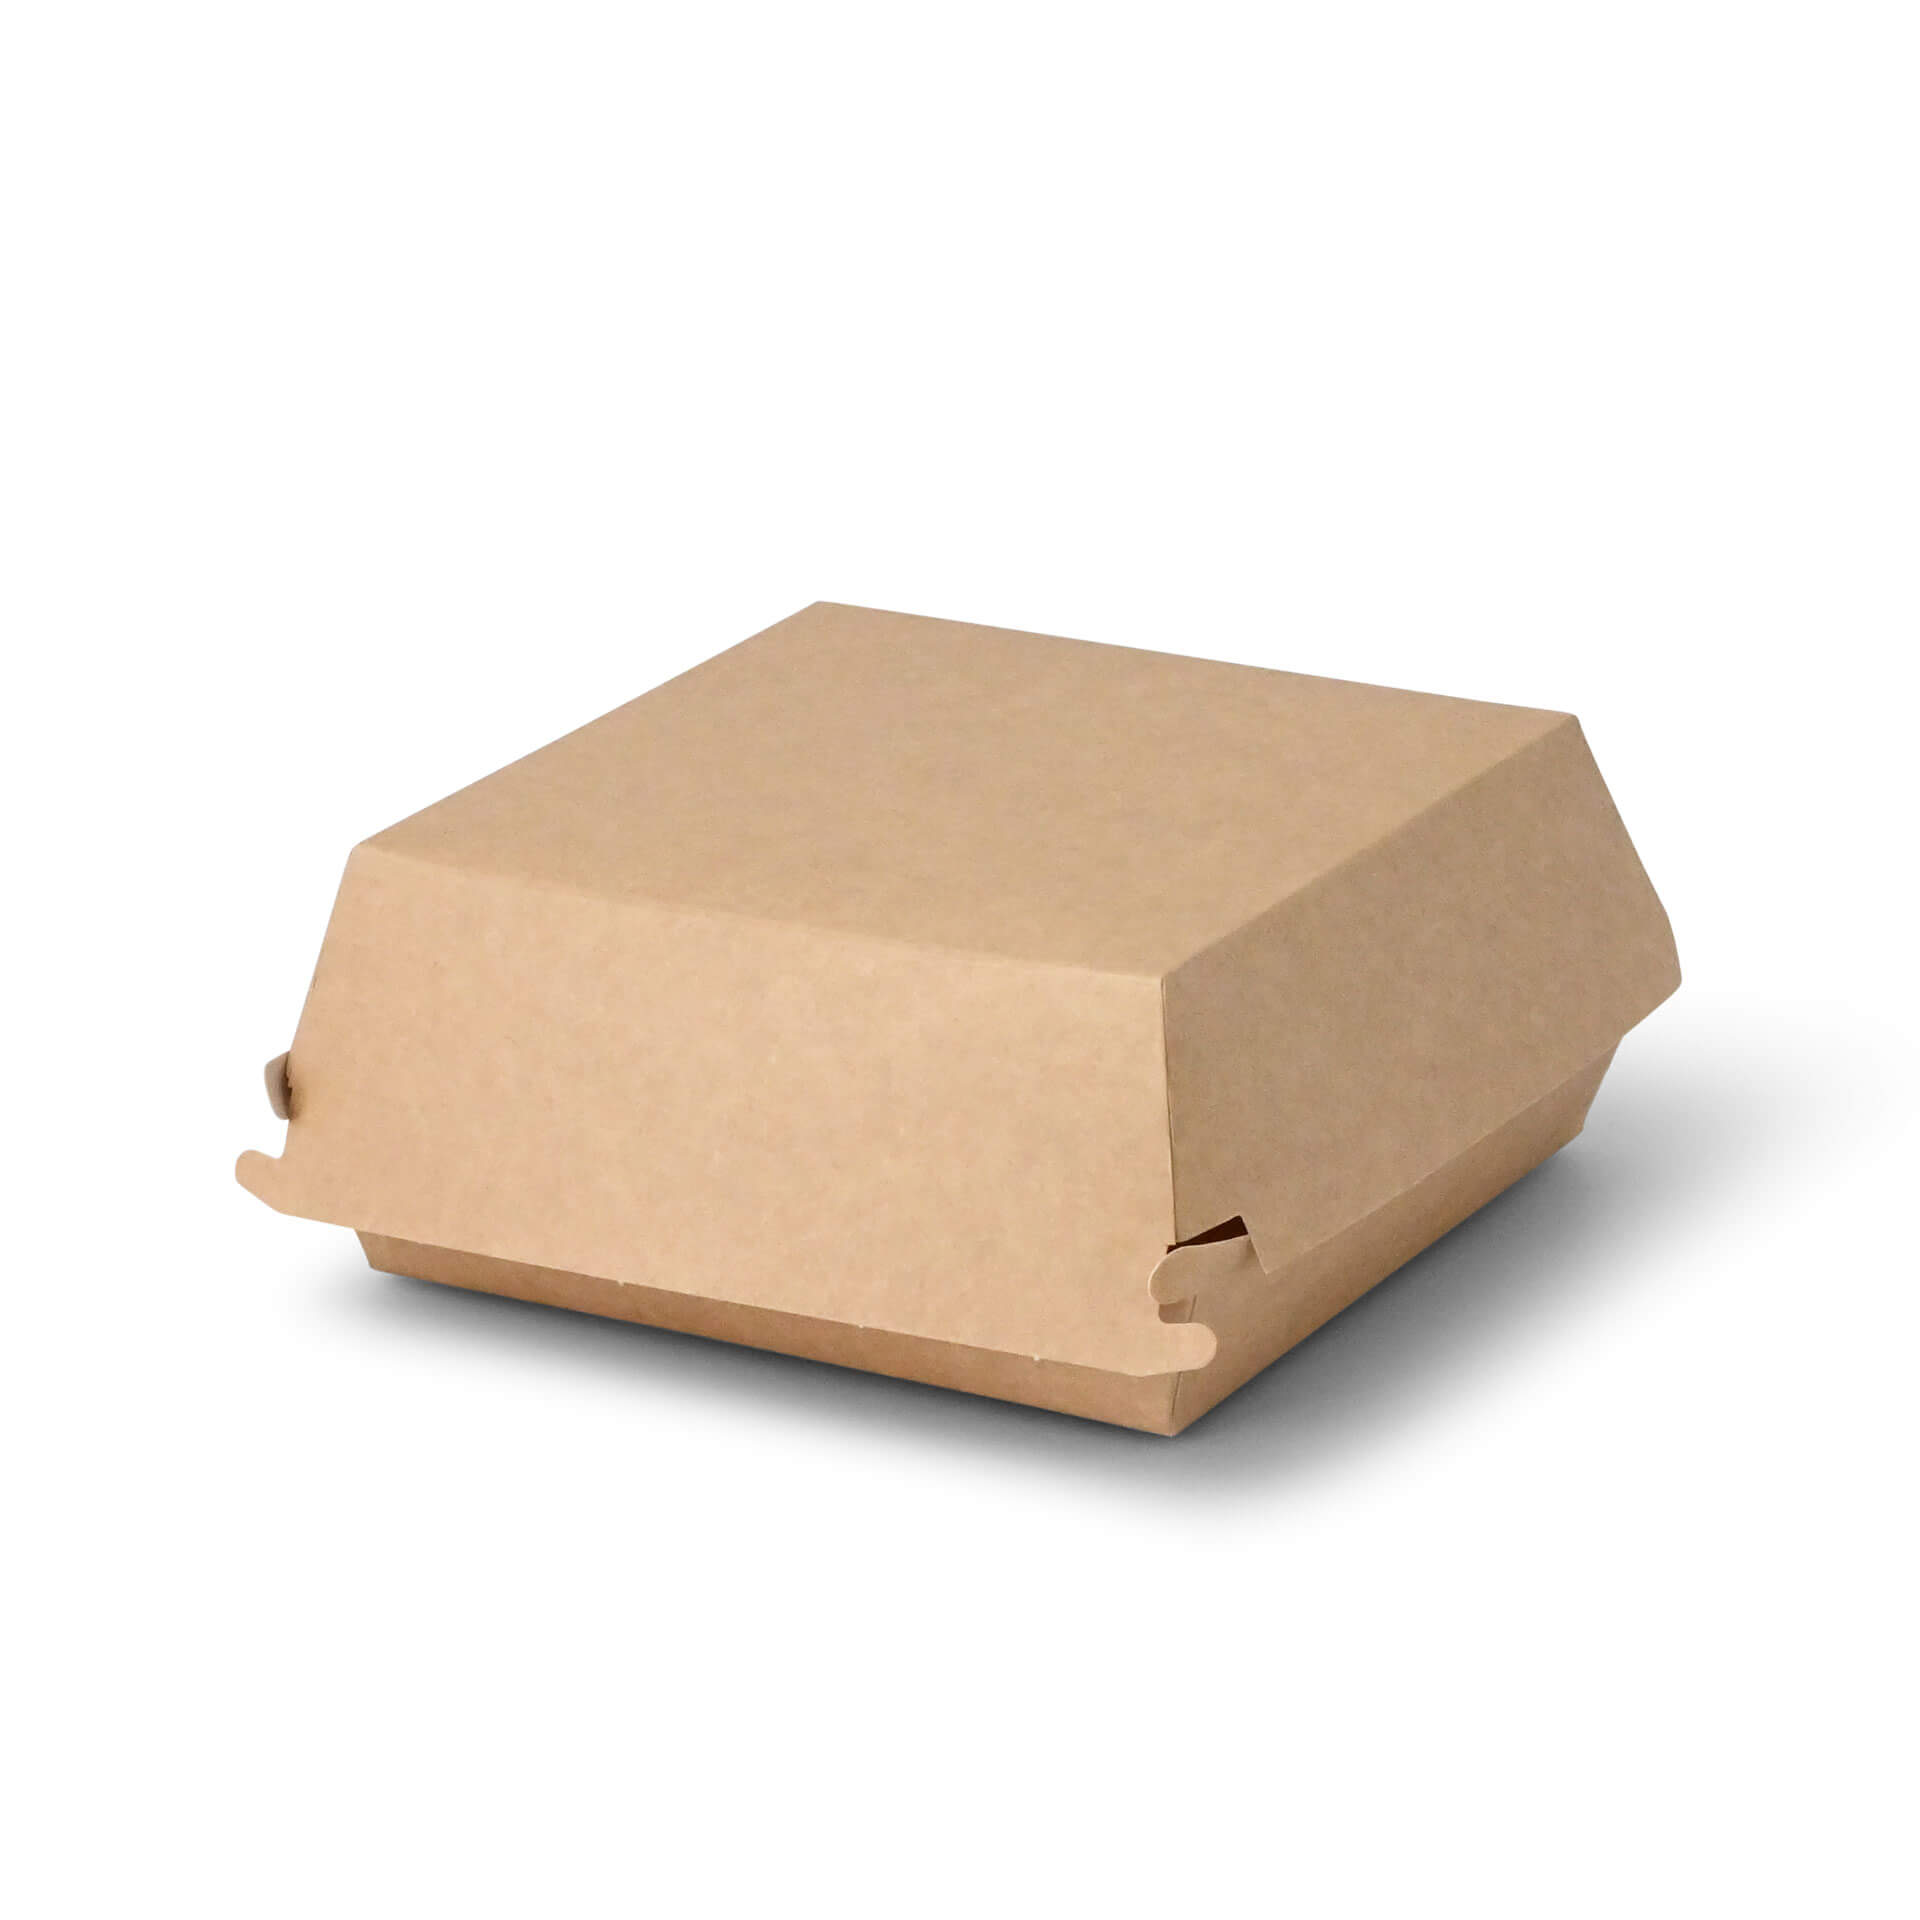 Take-away-Burger-Boxen 14,5 x 14,5 x 8 cm, braun-weiß